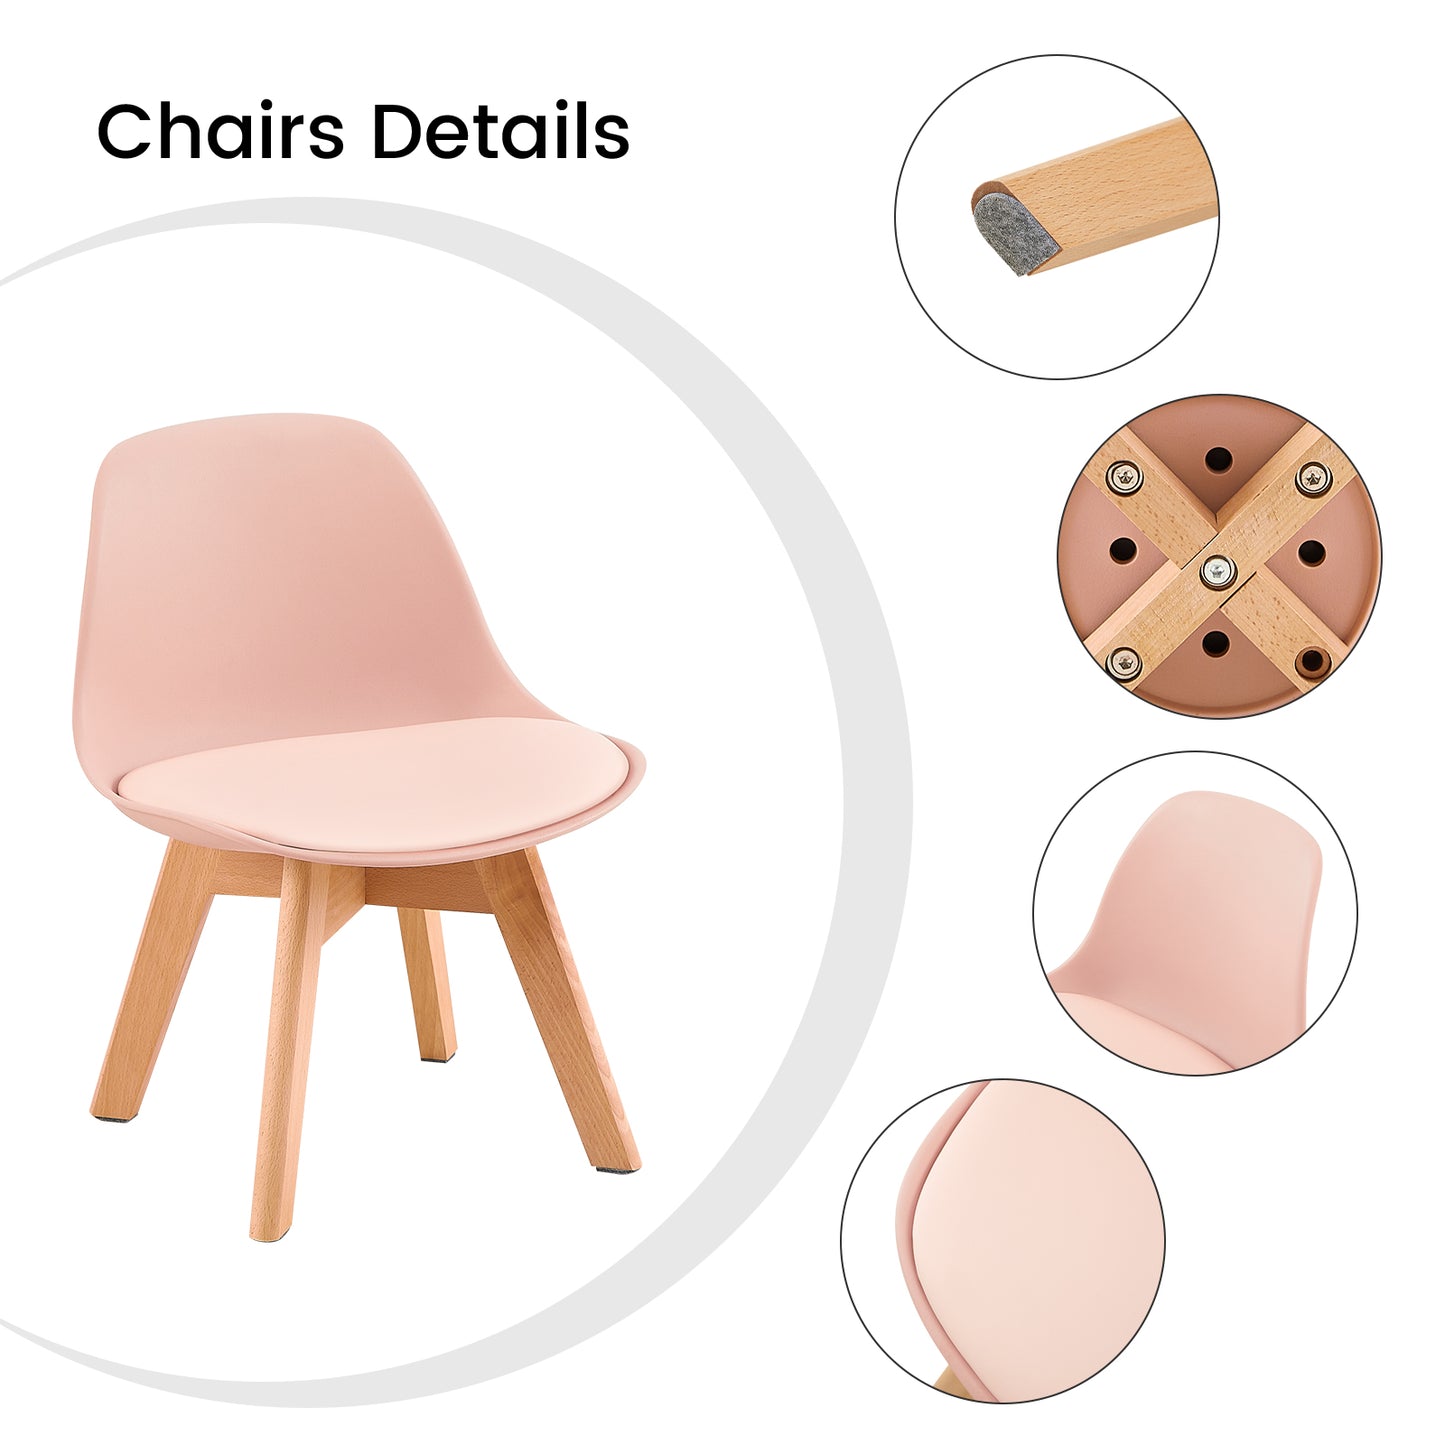 GRAND Children's Dining Chair Beech Legs Set of 2 - Pink/White